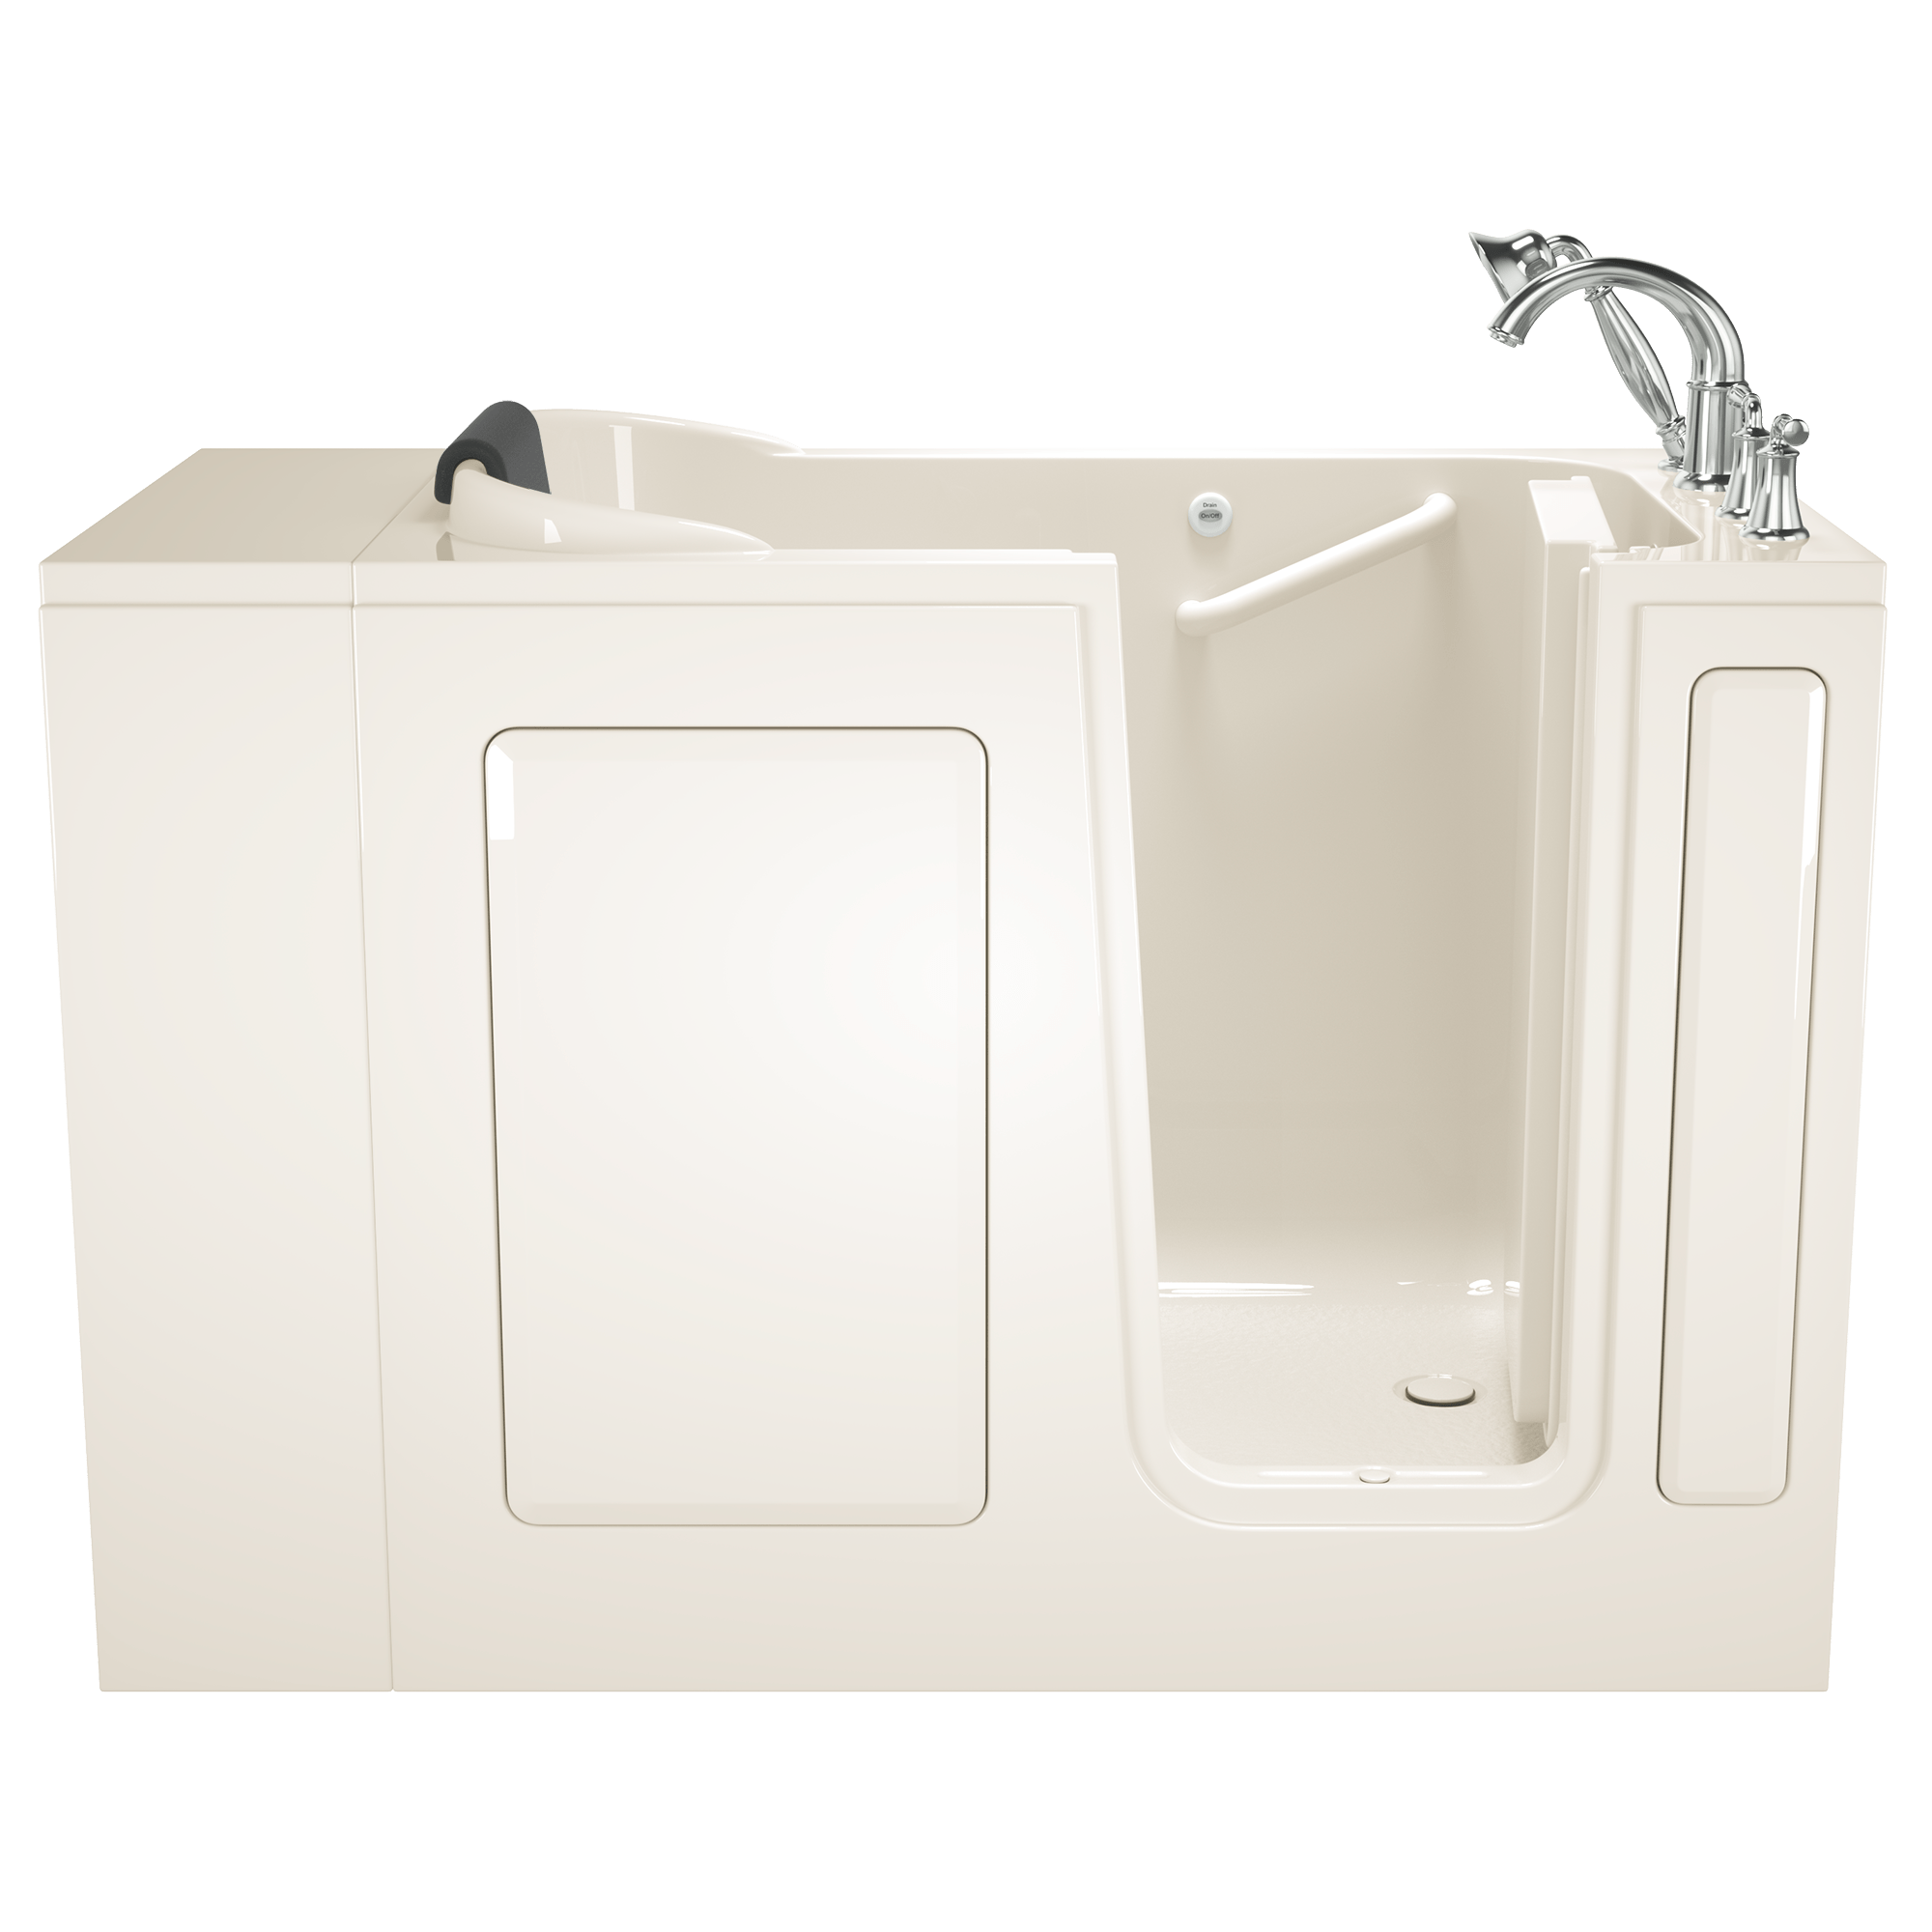 Gelcoat Premium Series 48x28 Inch Soaking Walk-In Bathtub - Right Hand Door and Drain